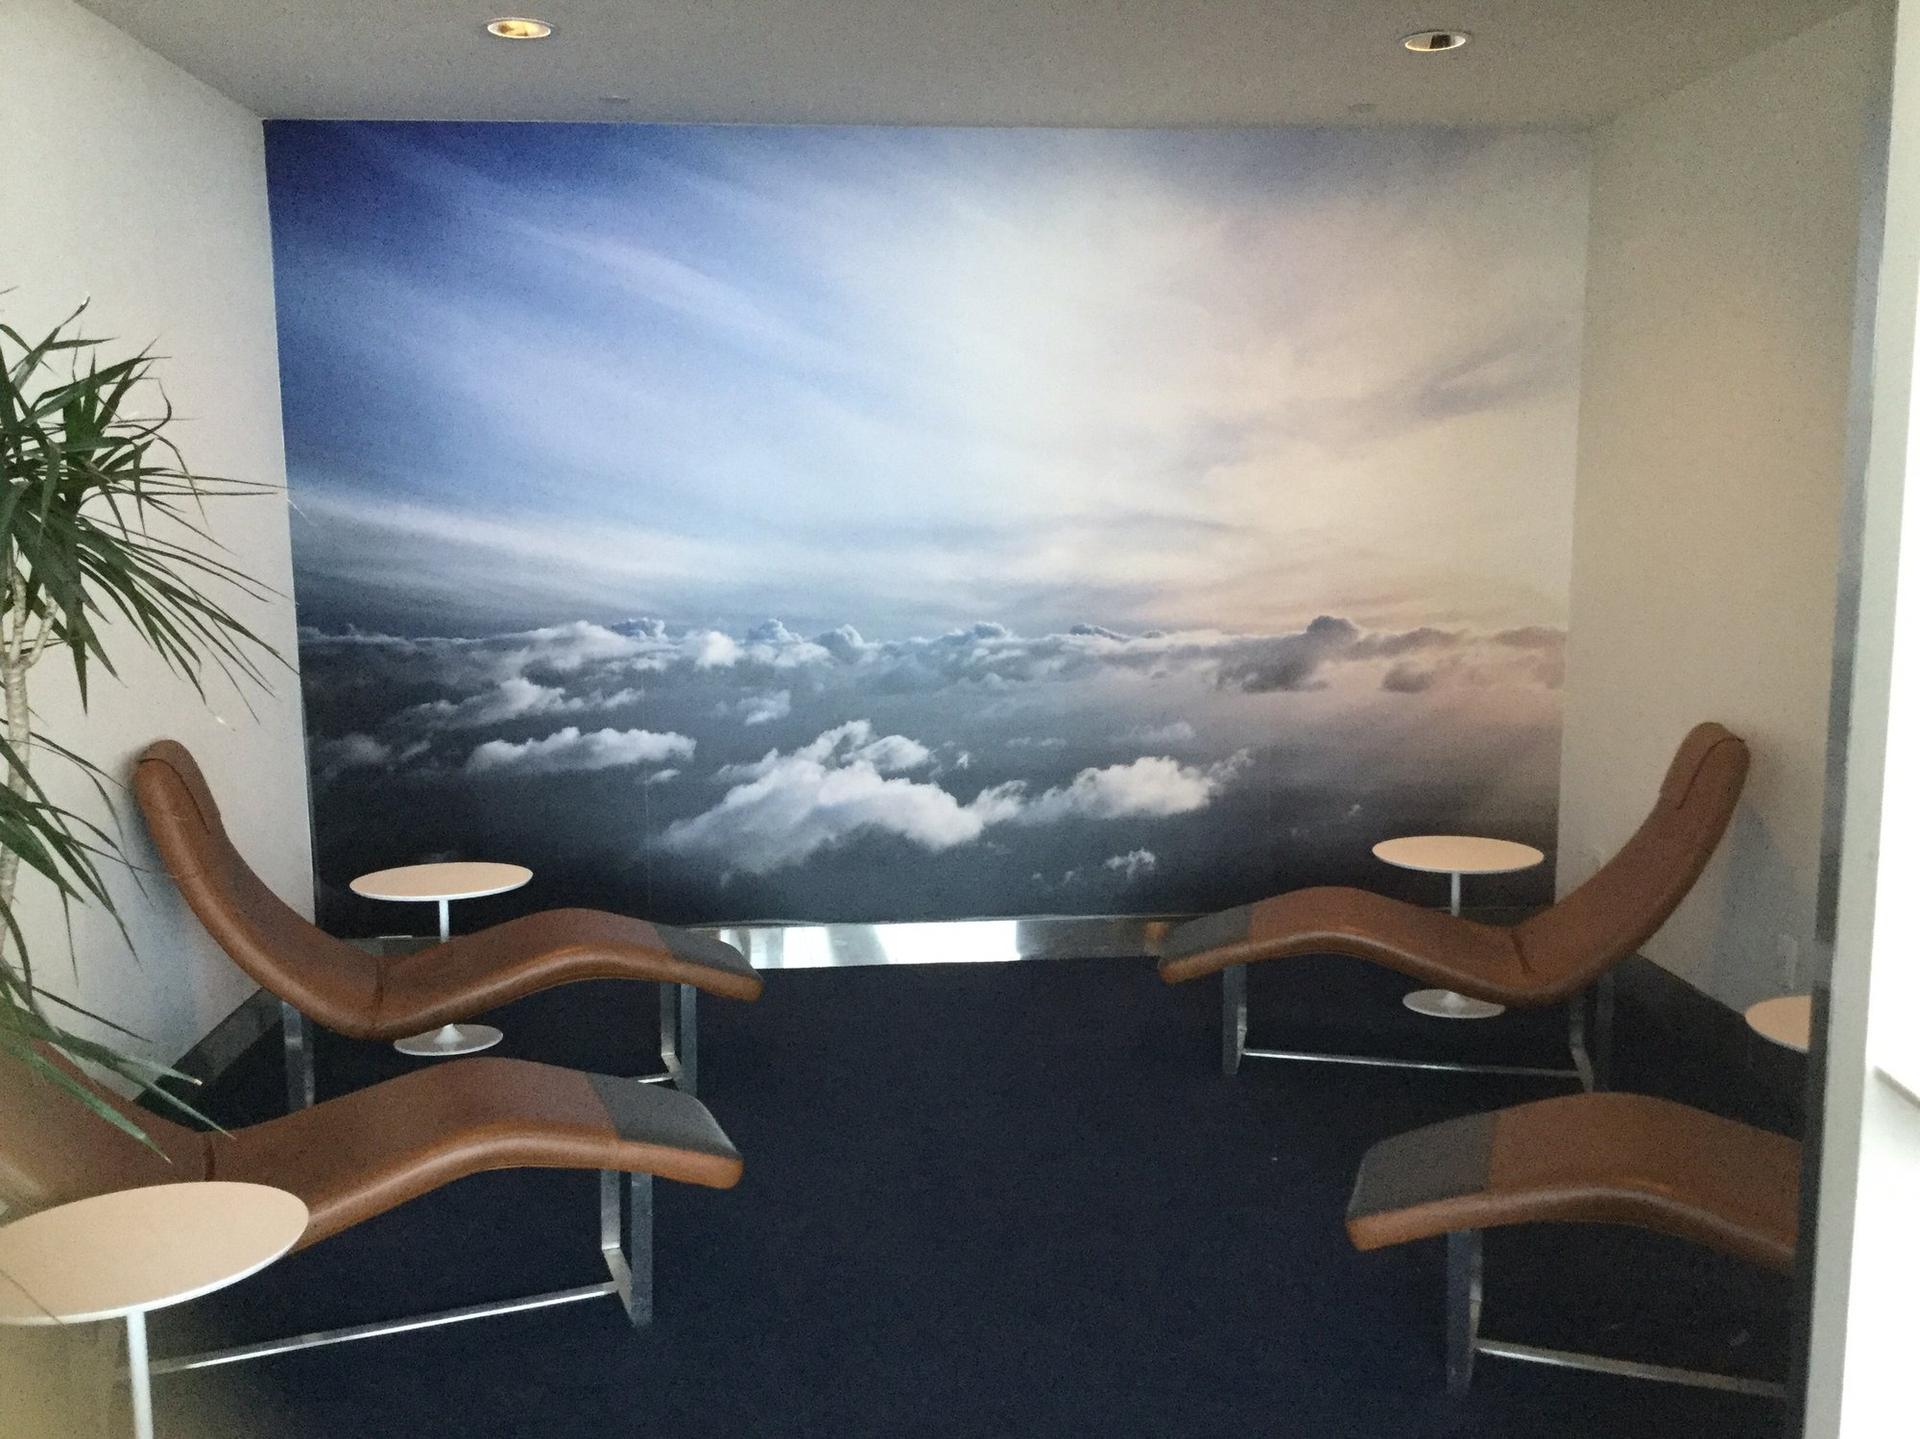 Lufthansa Business Lounge image 20 of 39